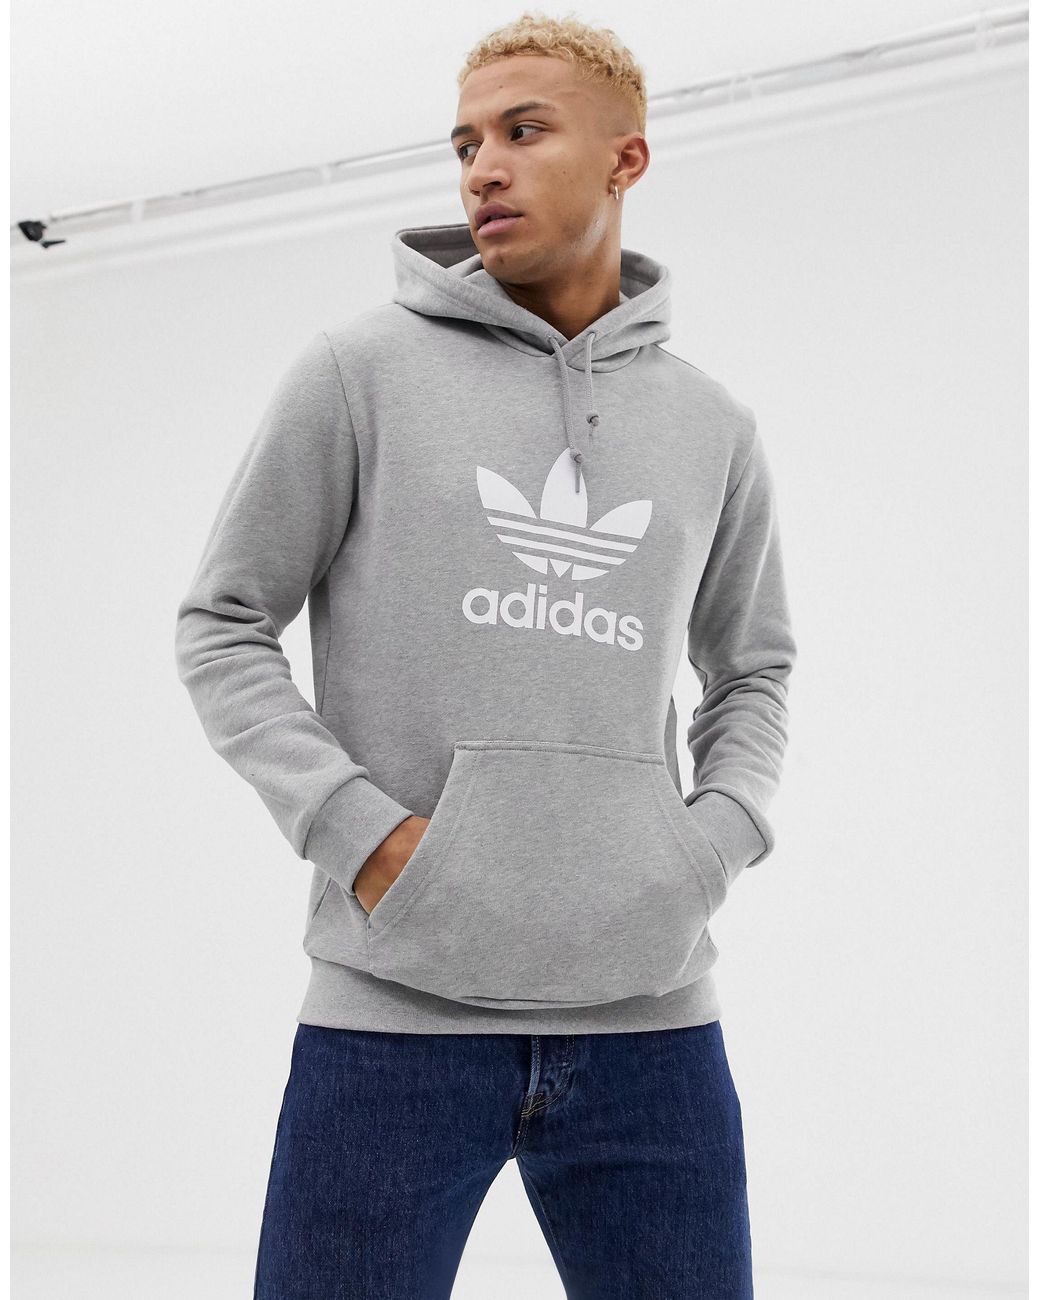 adidas Originals Cotton Hoodie With Trefoil Logo in Grey (Gray) for Men ...